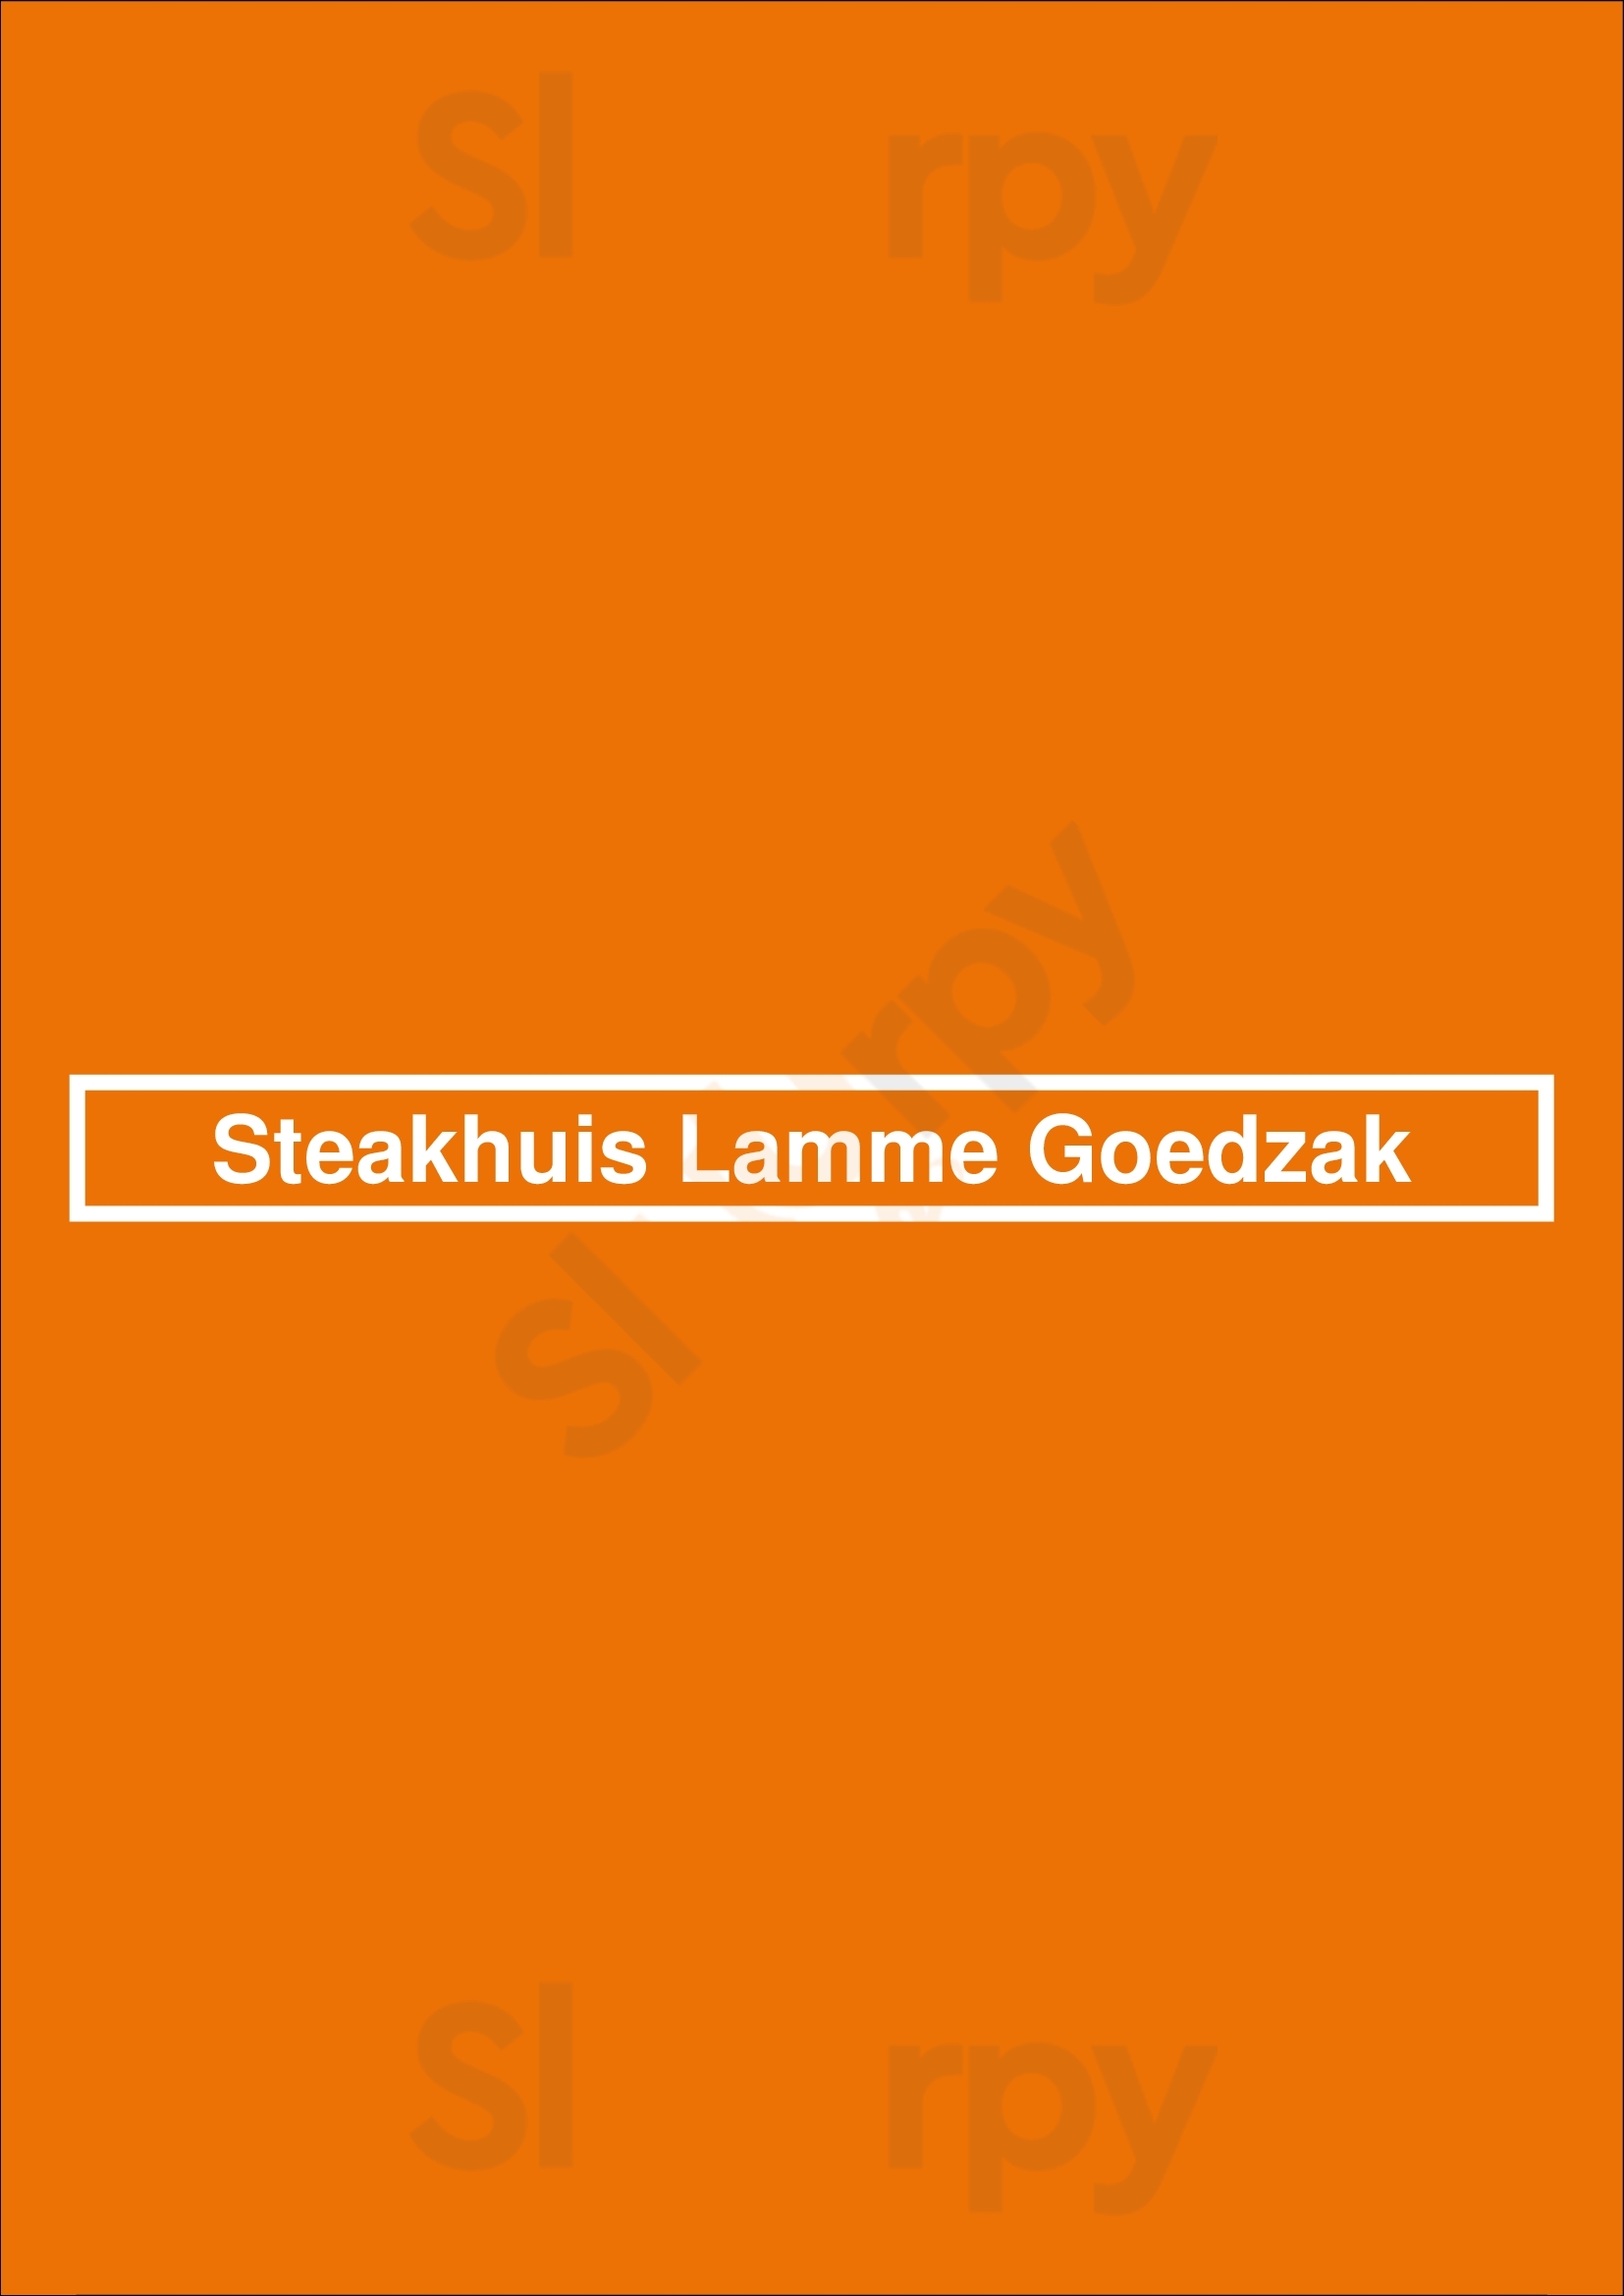 Steakhouse Lamme Goedzak Lebbeke Menu - 1